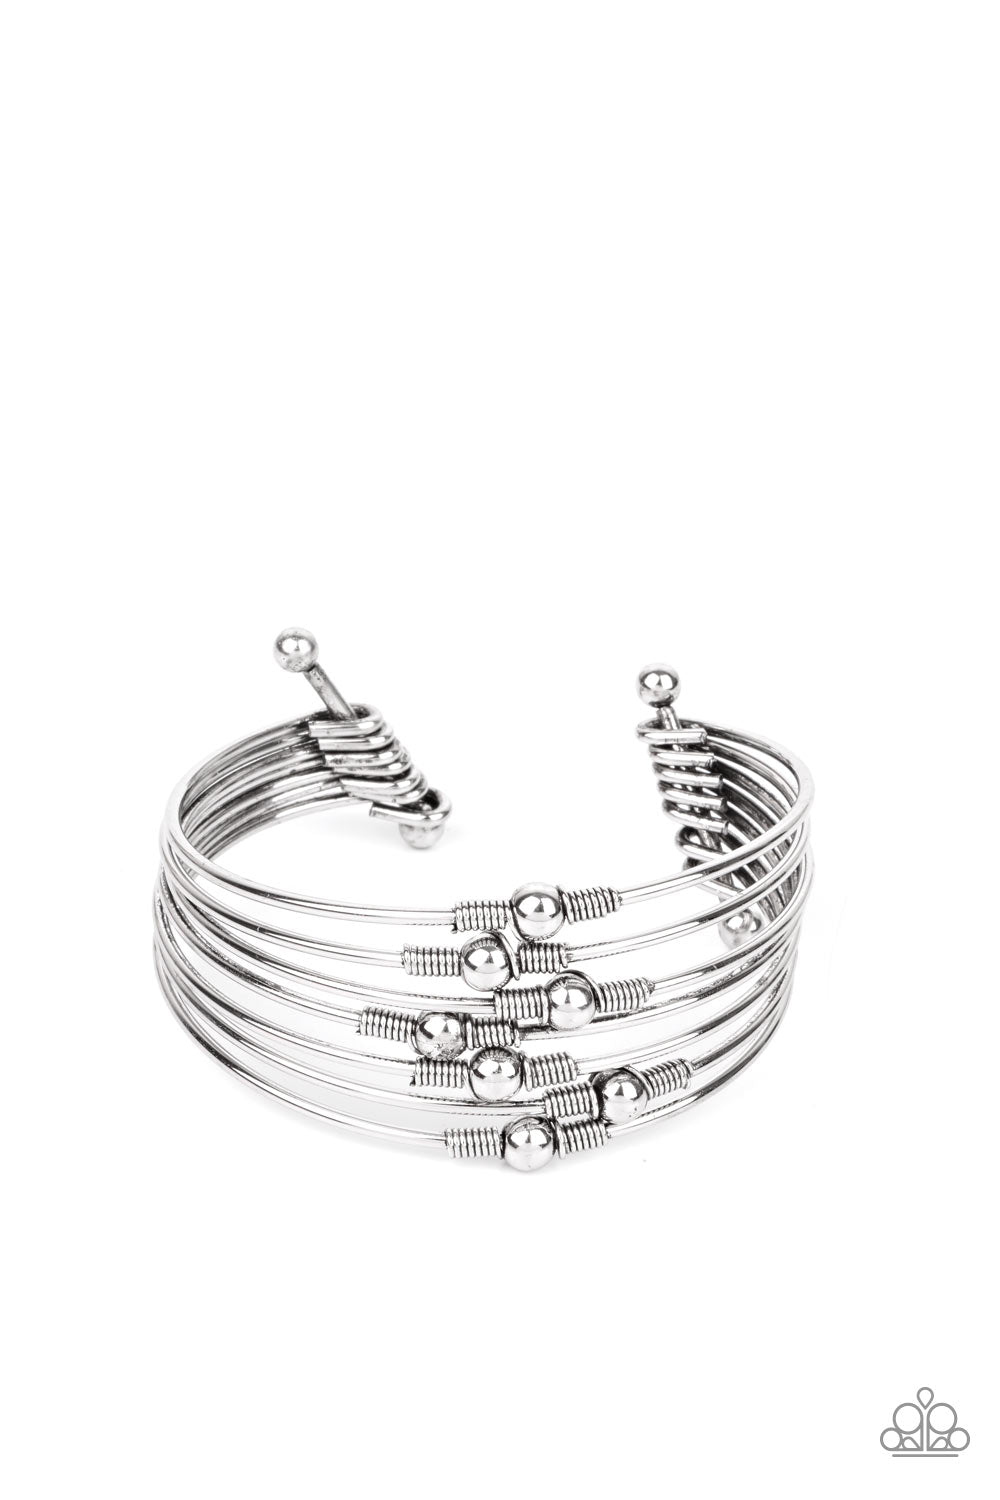 Industrial Intricacies Silver Cuff Bracelet - Paparazzi Accessories- lightbox - CarasShop.com - $5 Jewelry by Cara Jewels